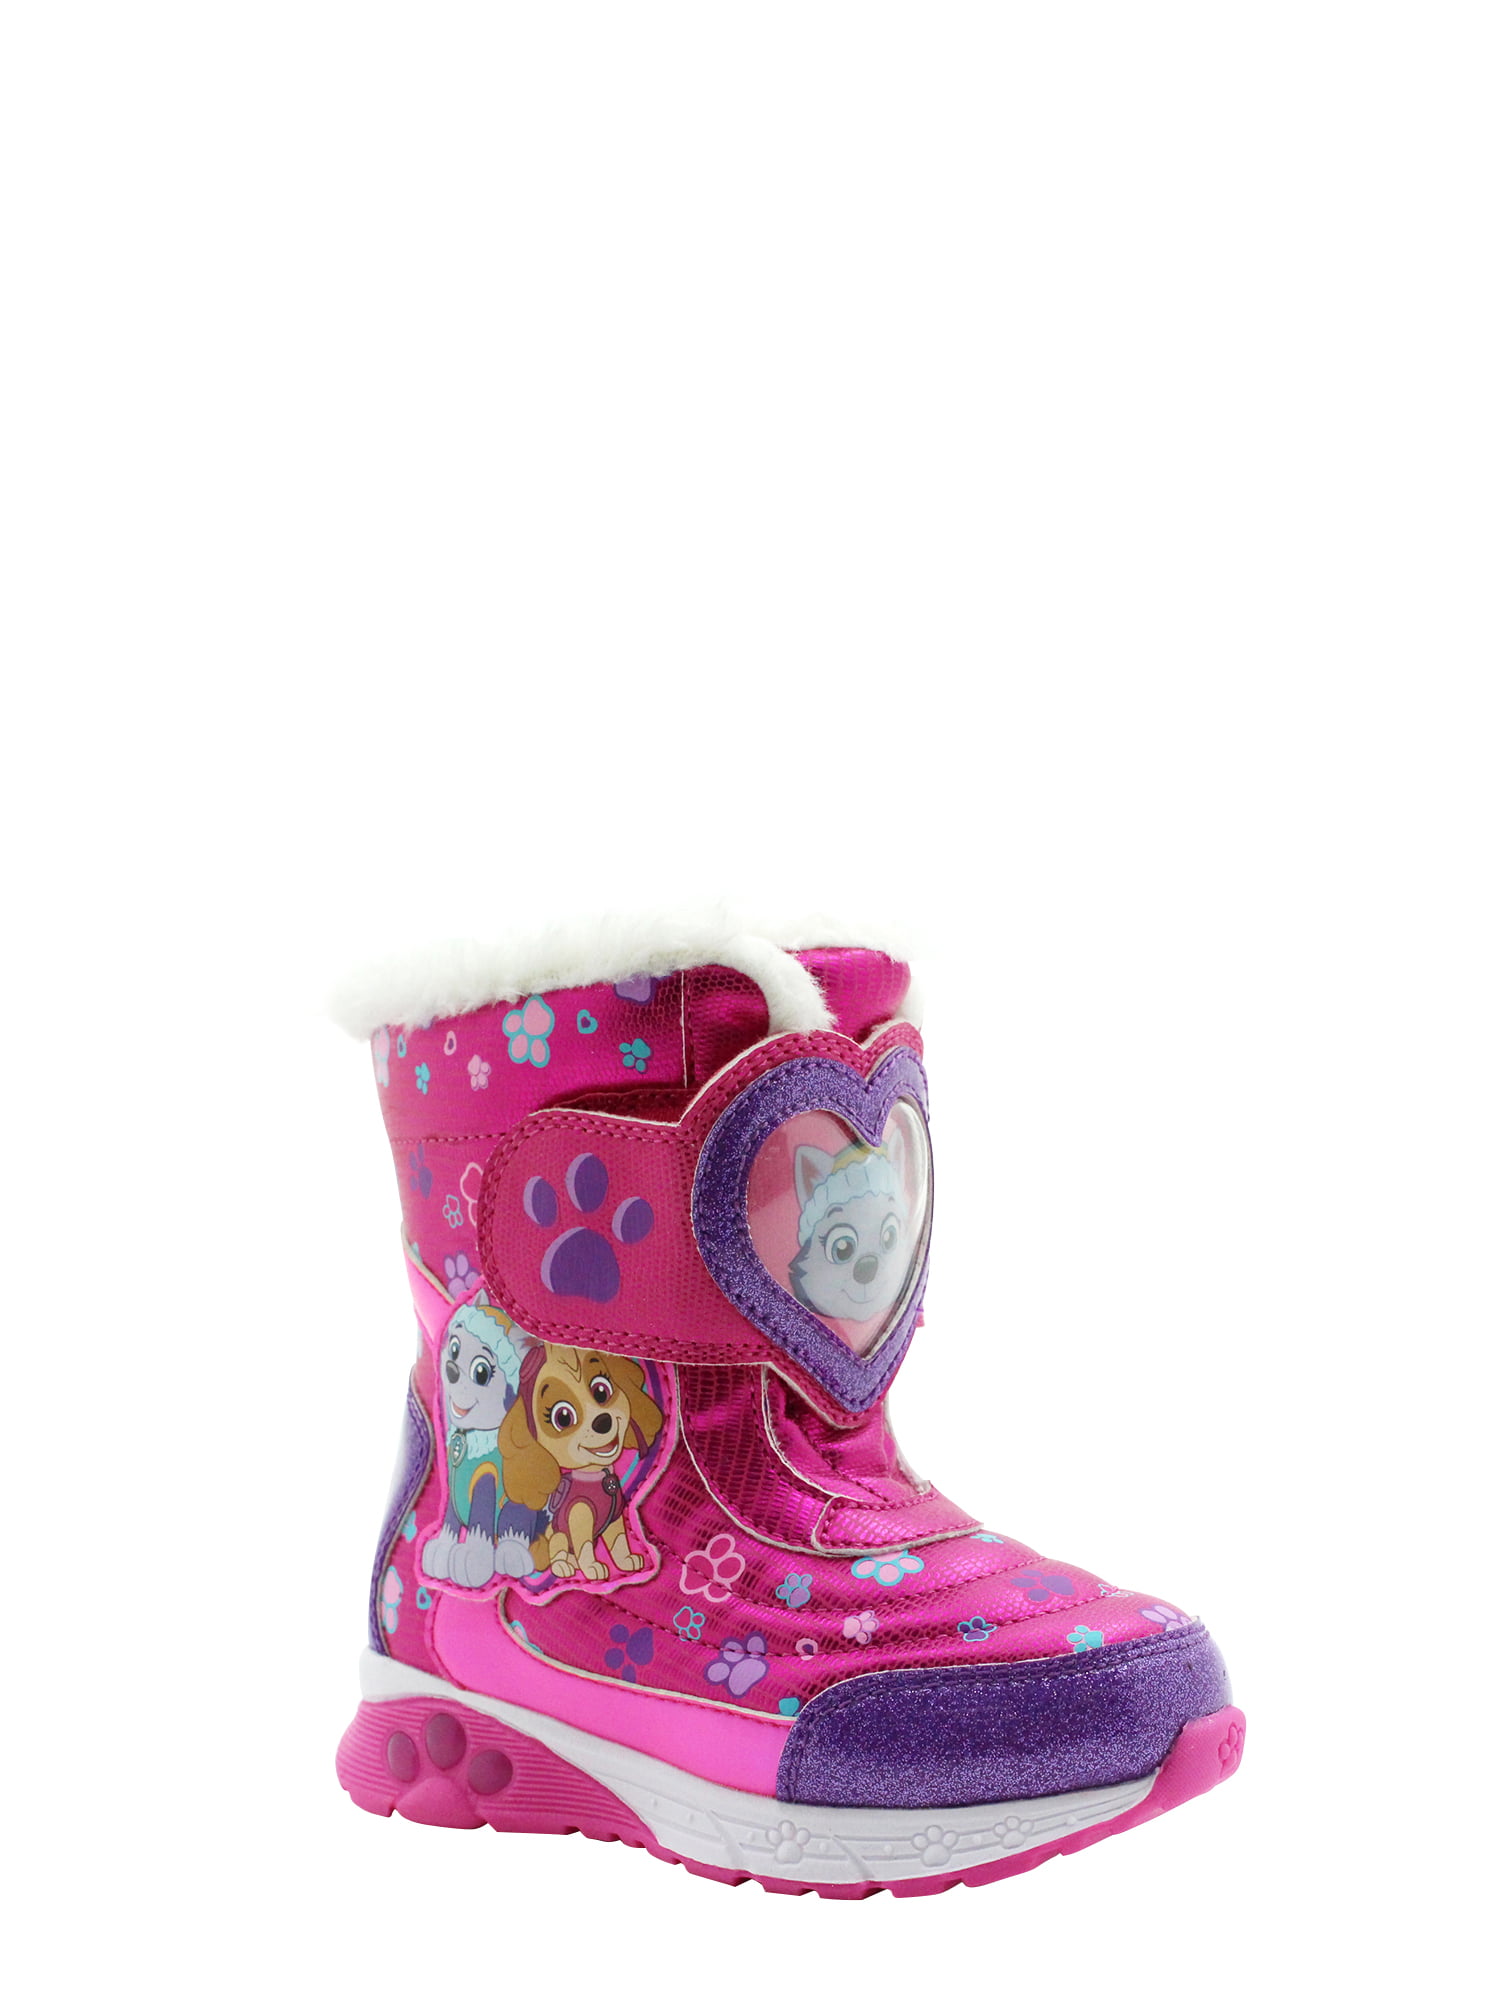 Nickelodeon Paw Patrol Skye Everest Insulated Snow Boot (Toddler - Walmart.com